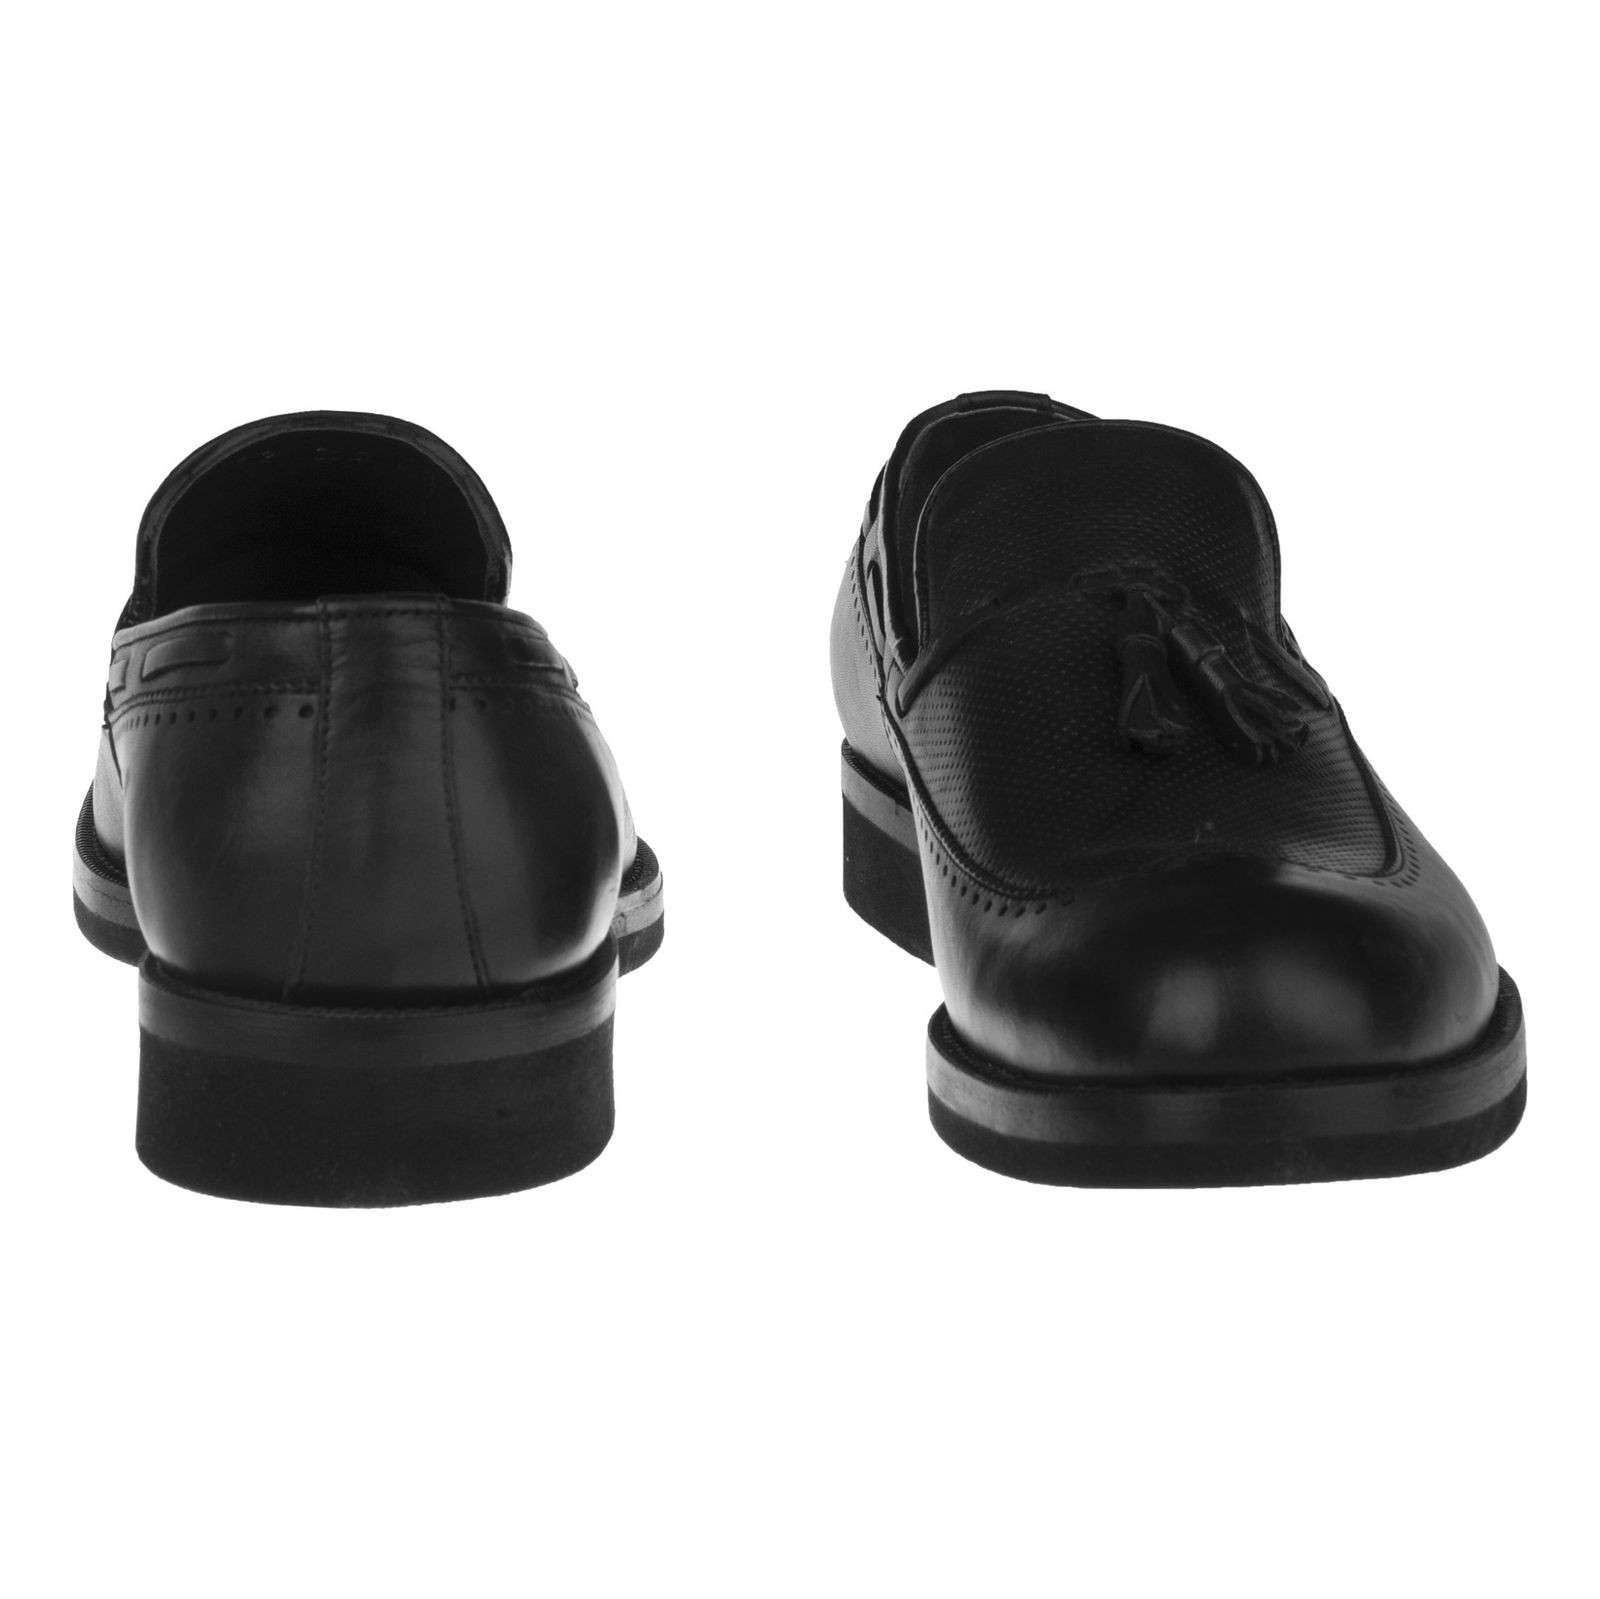 کفش مردانه بلوط مدل 7184A503-101 - مشکی - 5